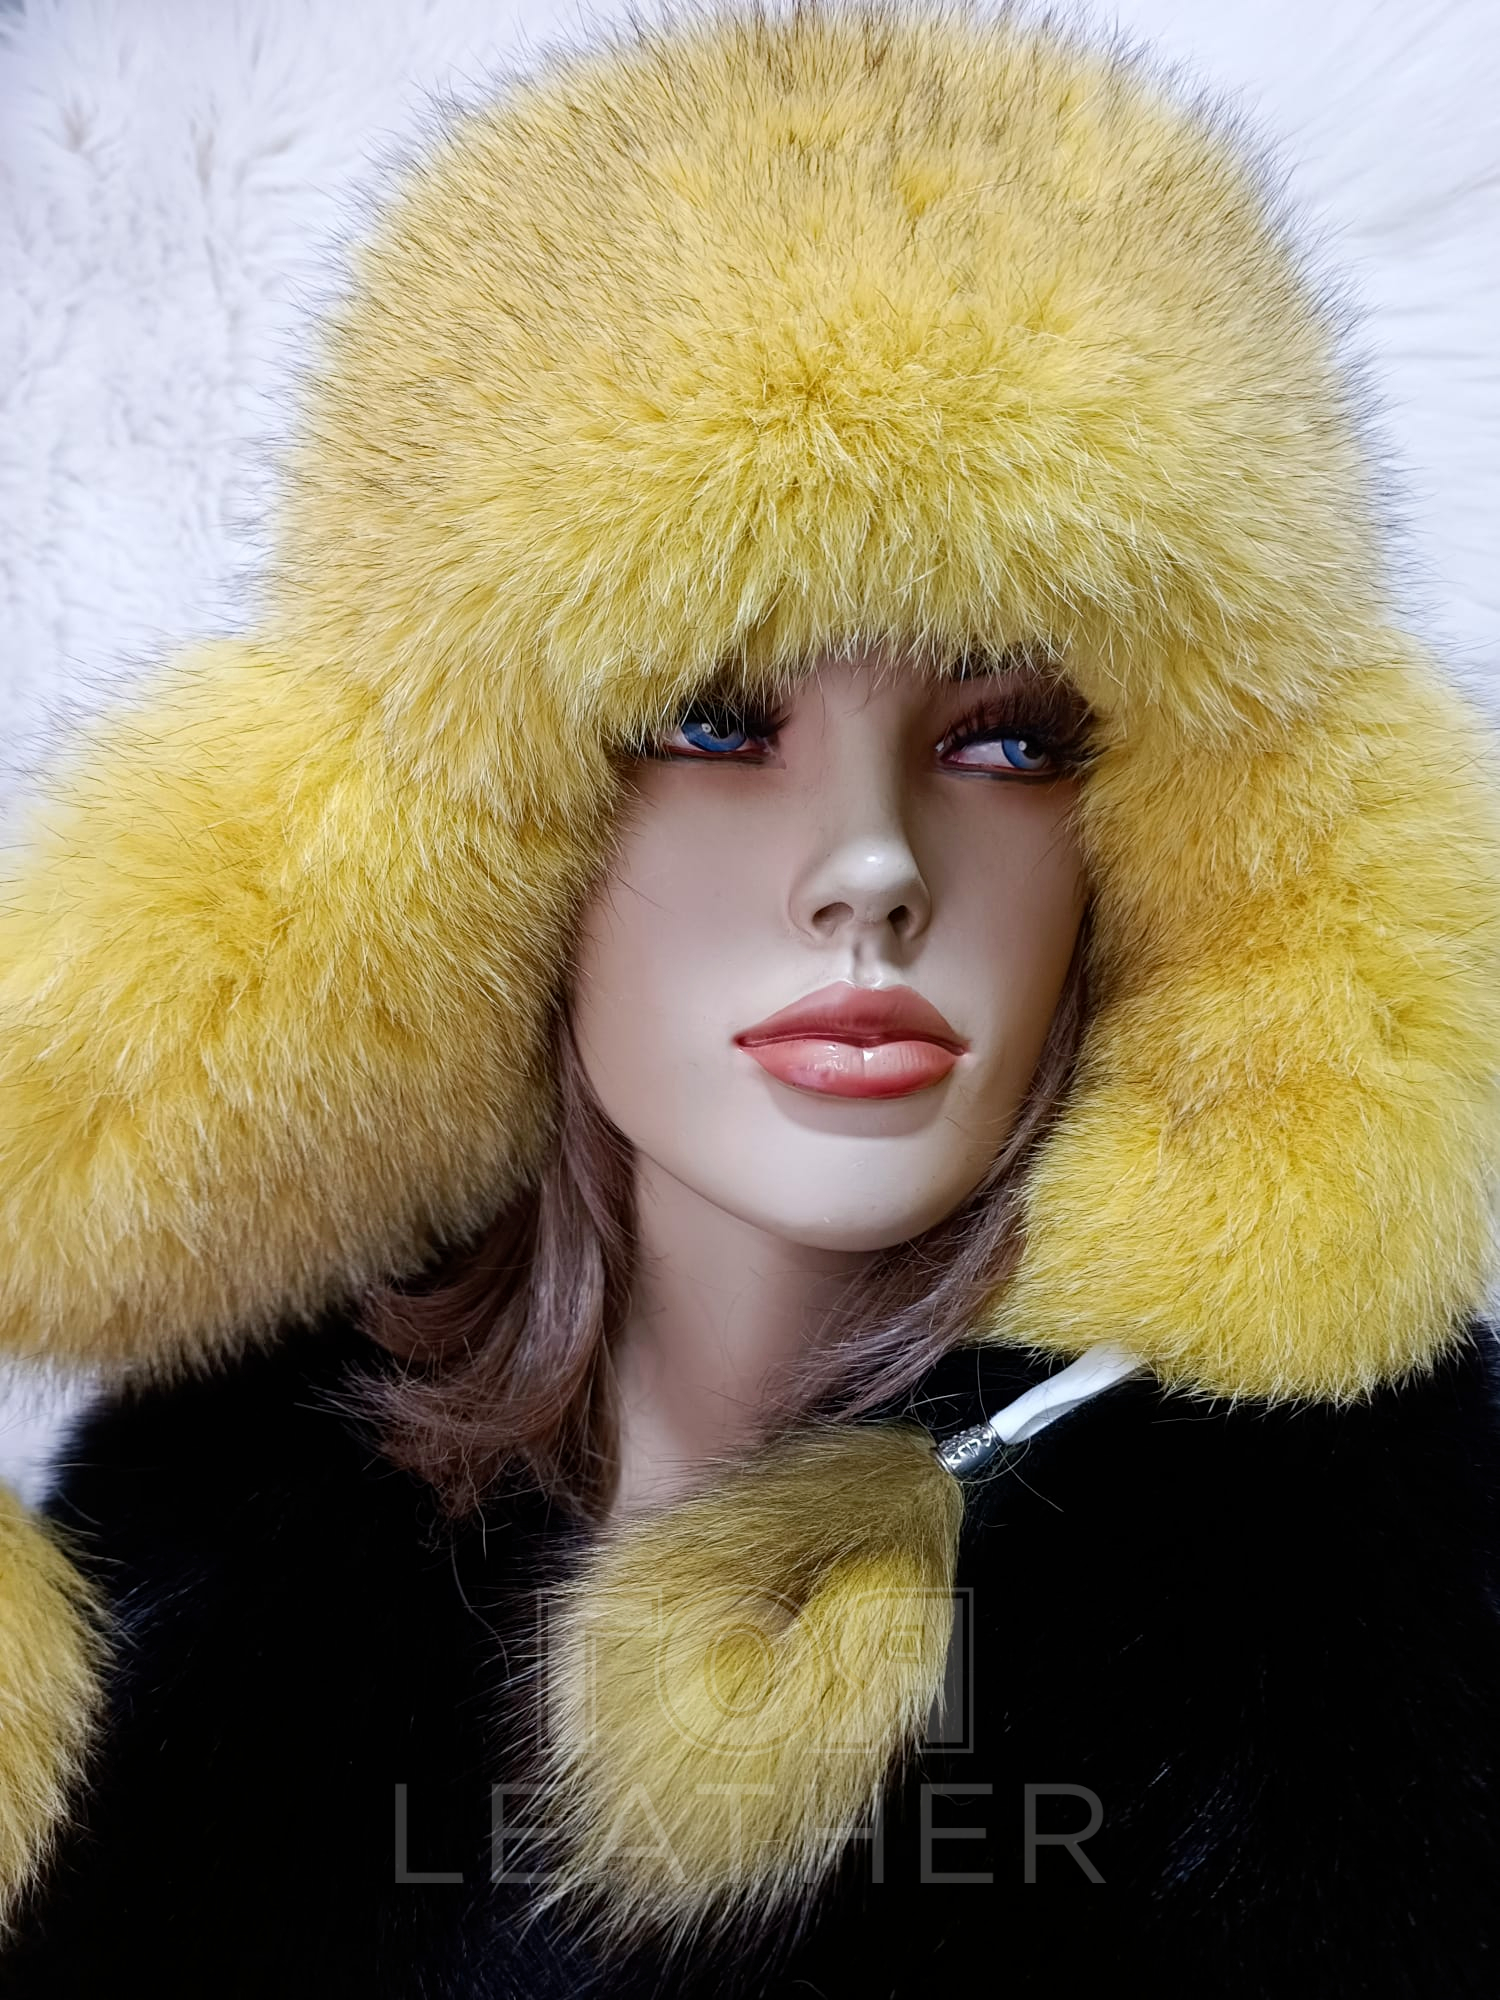 Дамска шапка ушанка от ГОЯ Leatner. Зимна шапка изработена от агнешка напа и лисица. 100% естествена кожа.